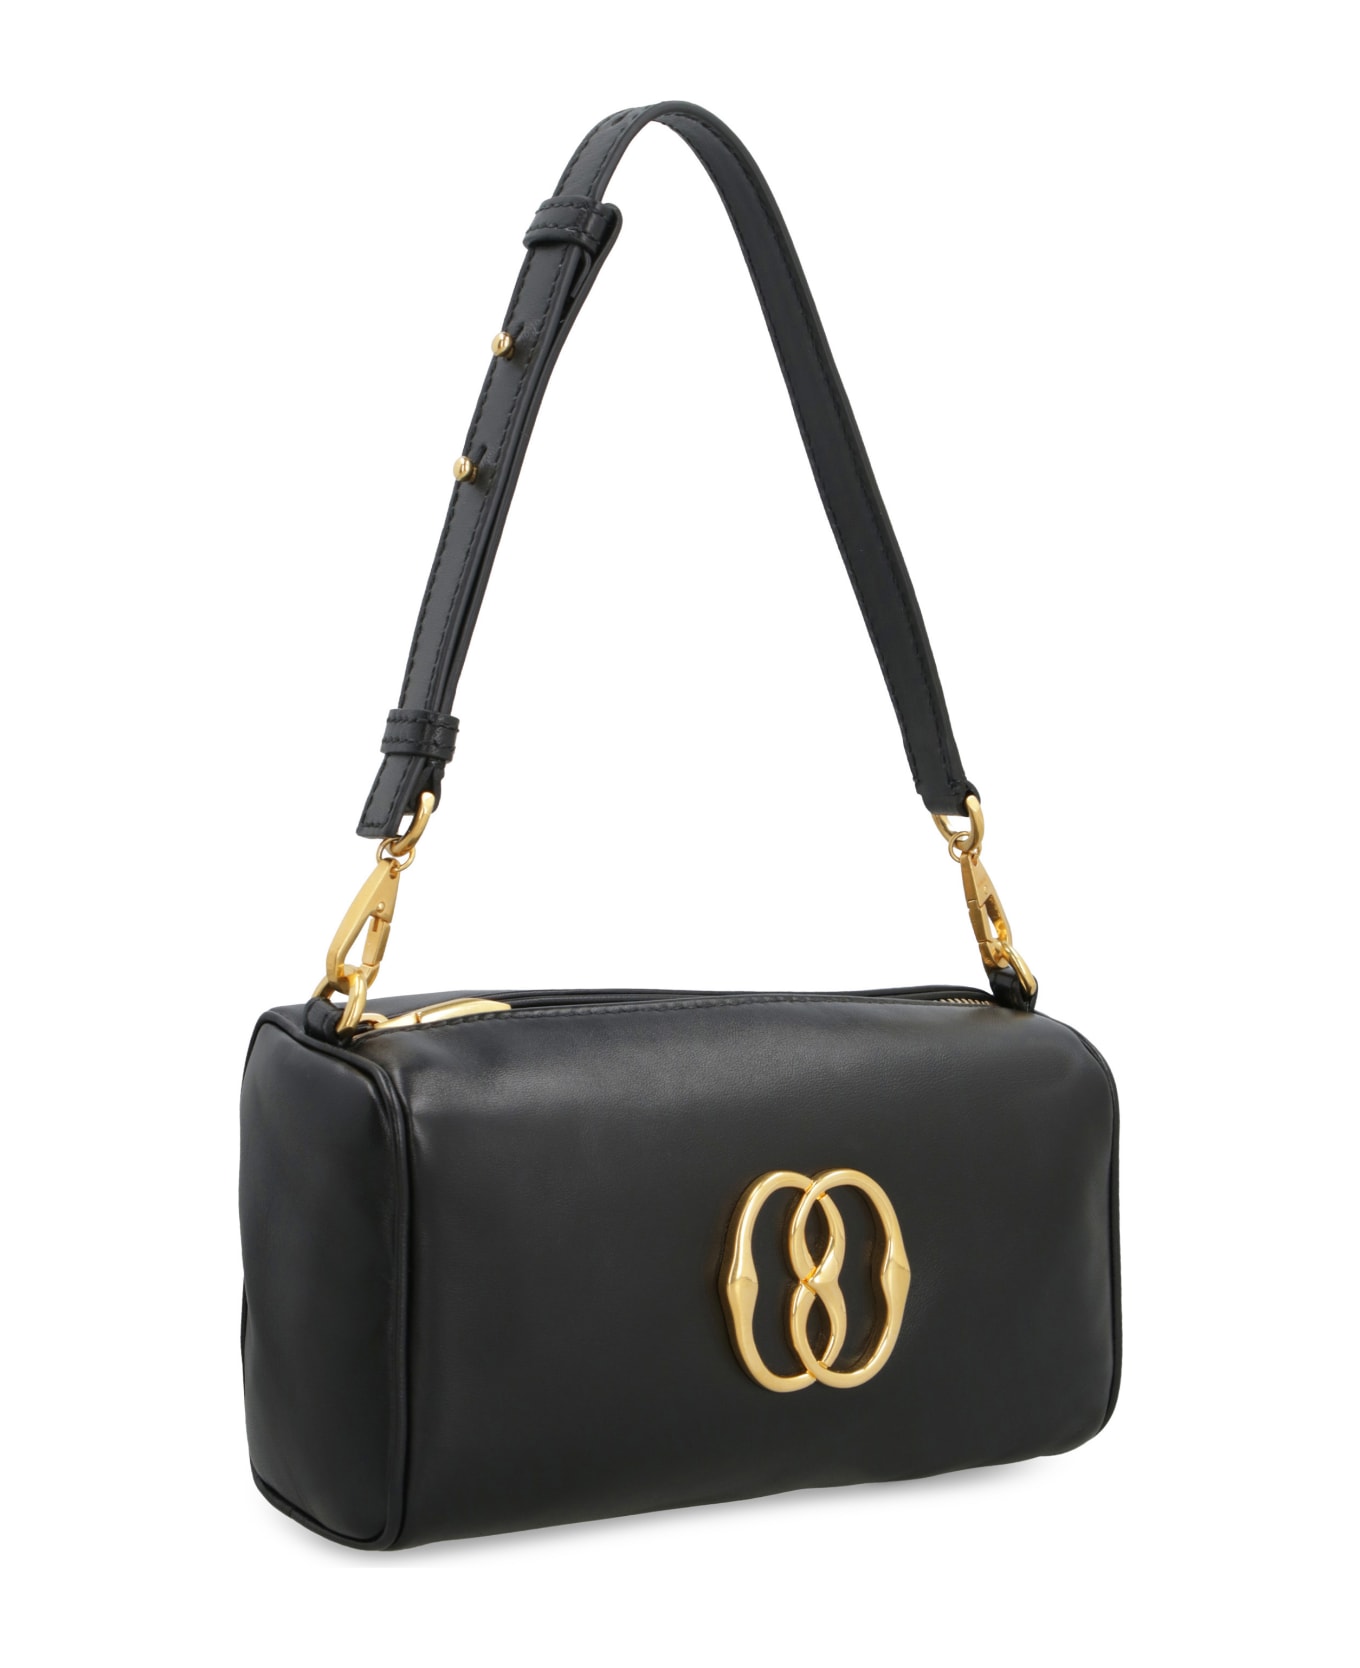 Bally Emblem Rox Leather Shoulder Bag - Black/oro